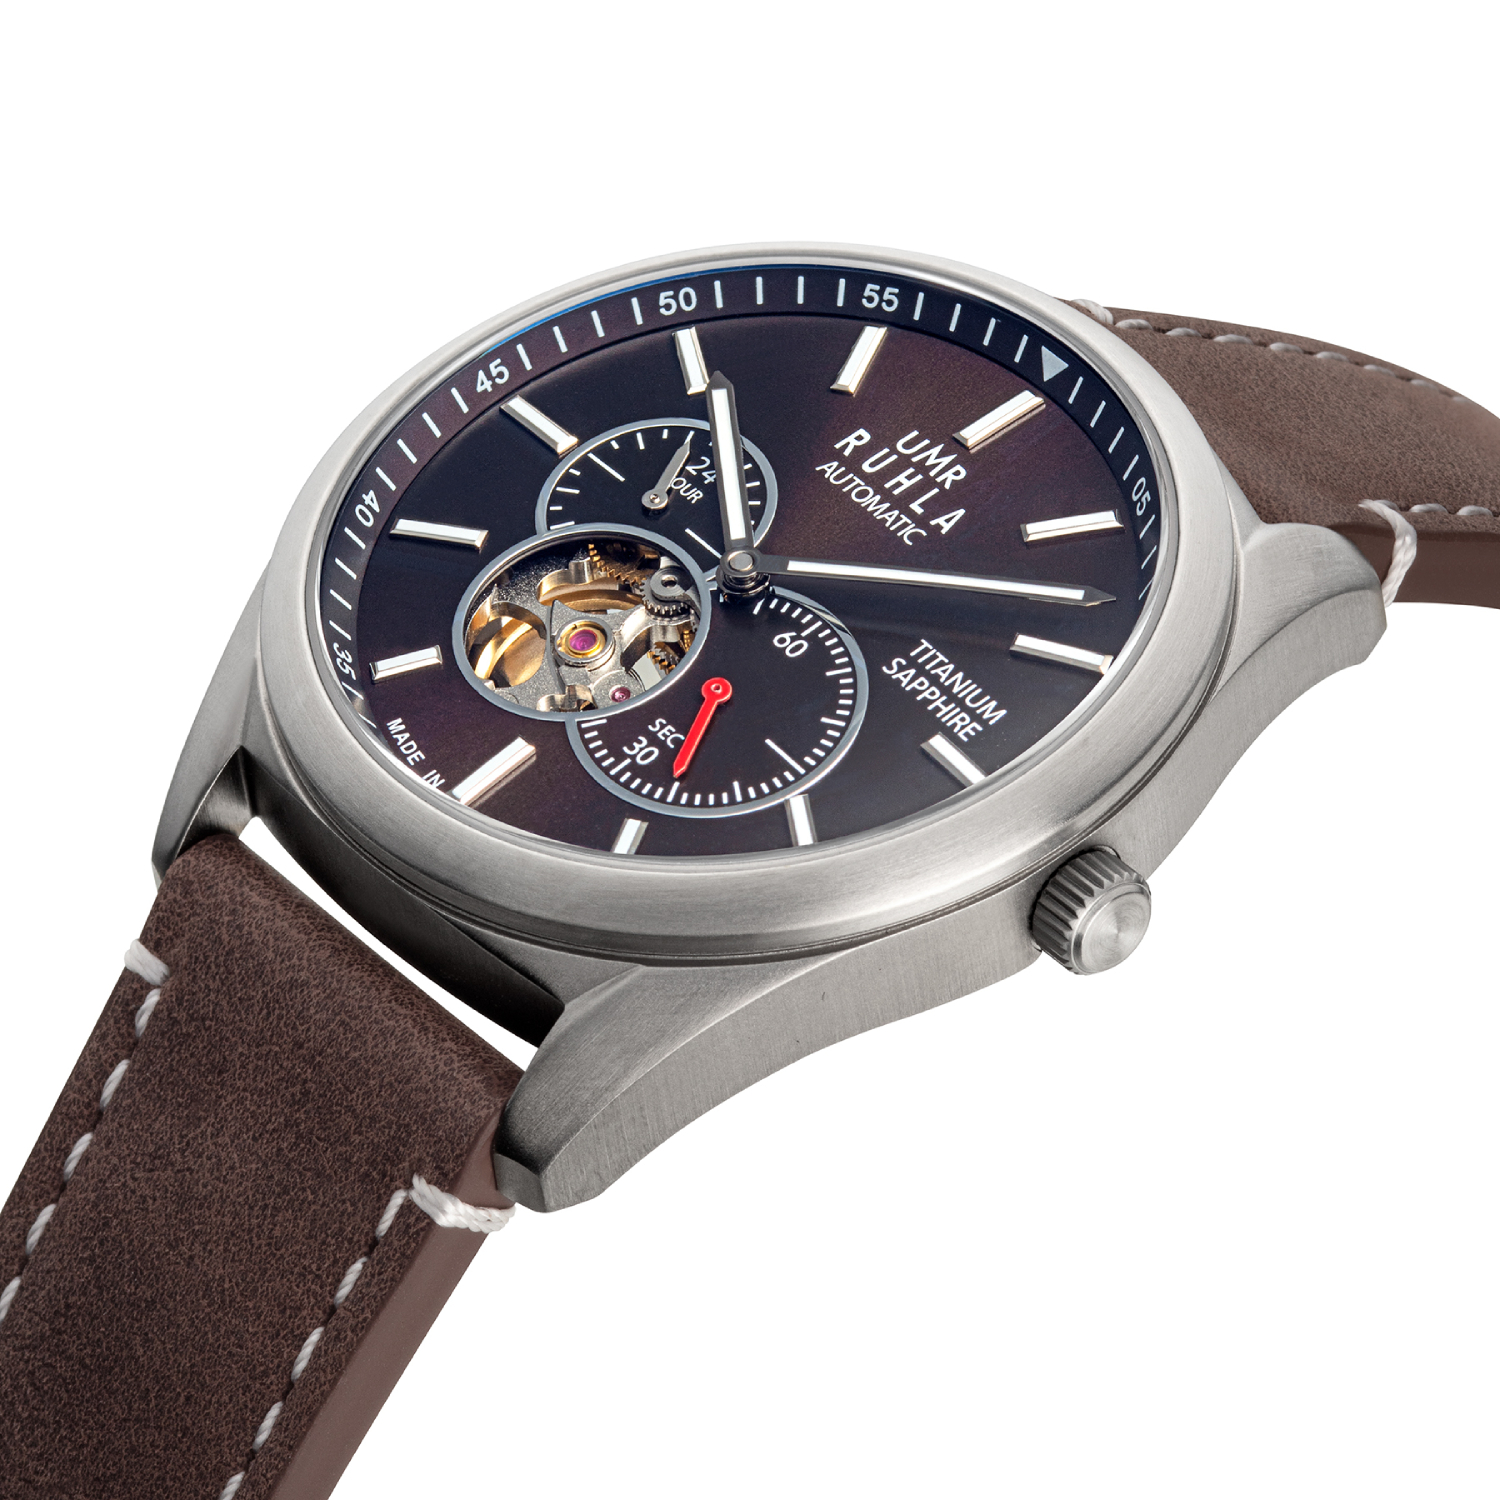 Uhren Manufaktur Ruhla - Automatik-Armbanduhr - Lederband braun